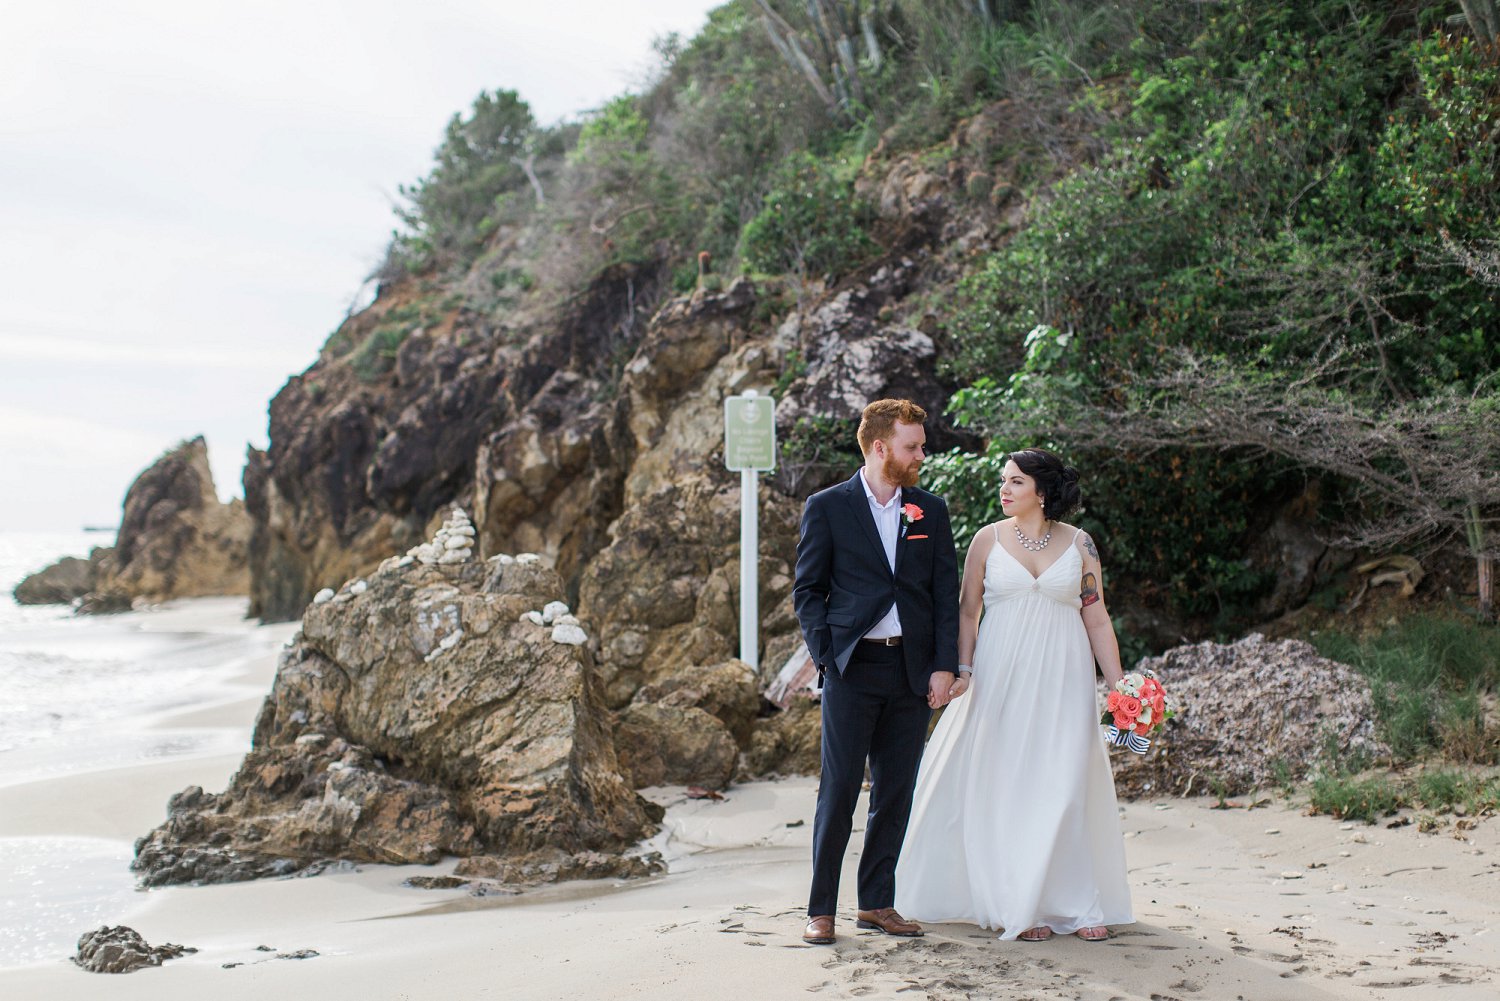 Bride and groom walk along Limetree beach after wedding ceremony.